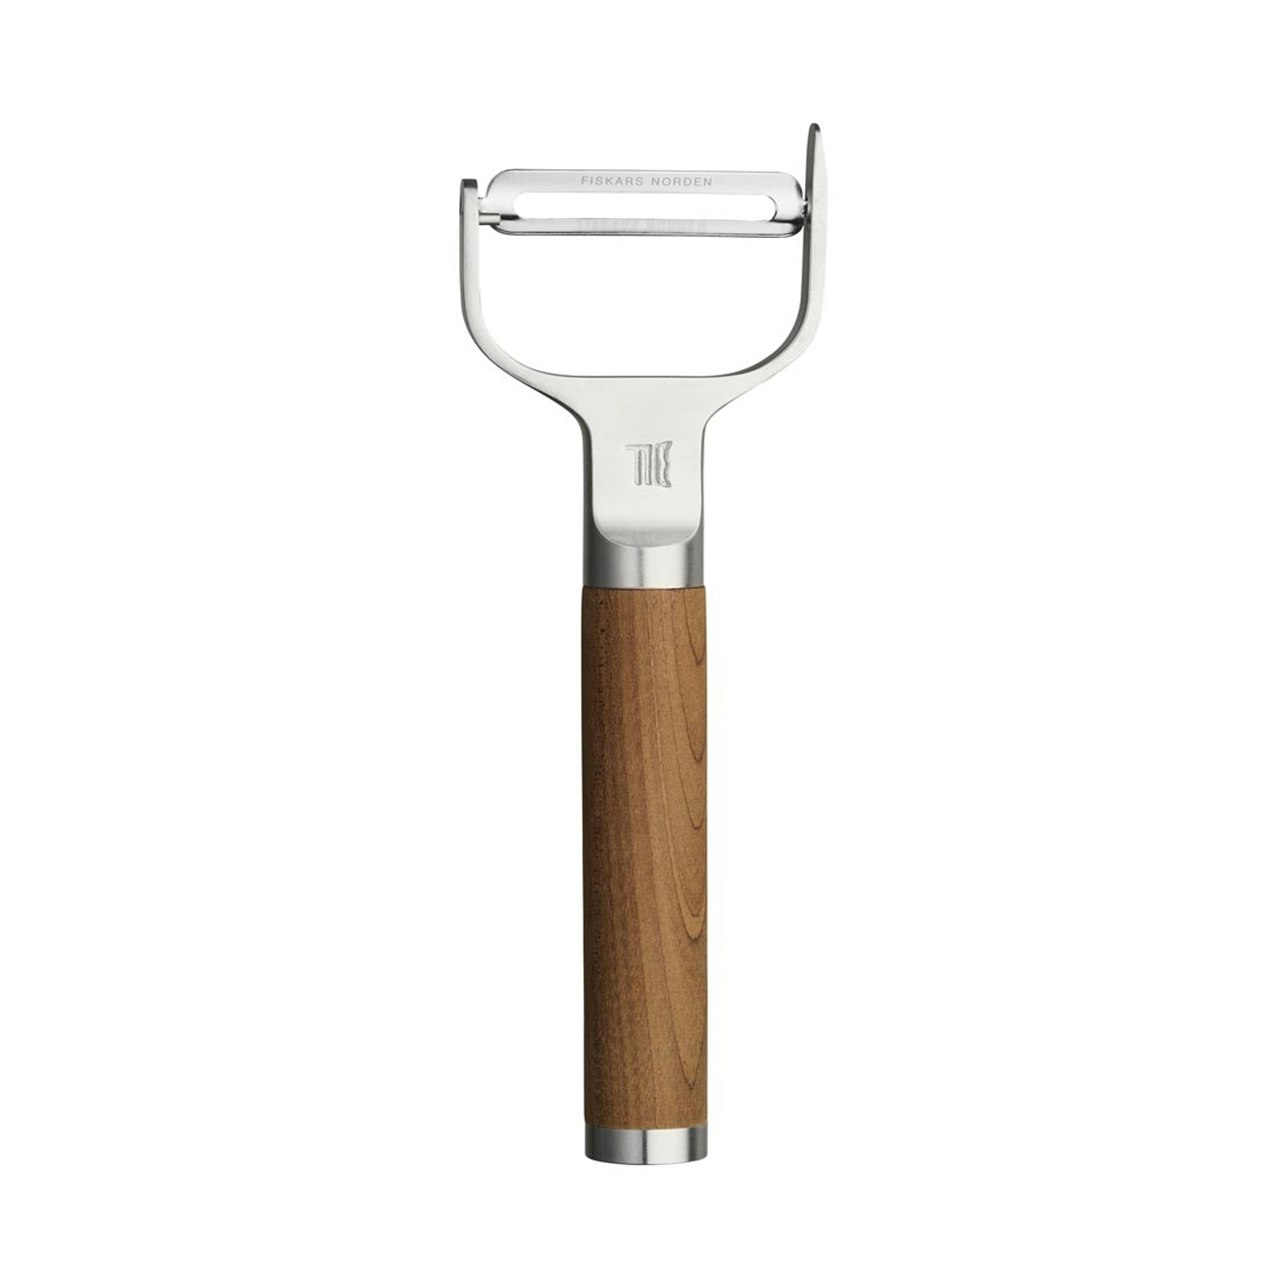 https://royaldesign.com/image/2/fiskars-norden-potato-peeler-with-movable-blade-0?w=800&quality=80